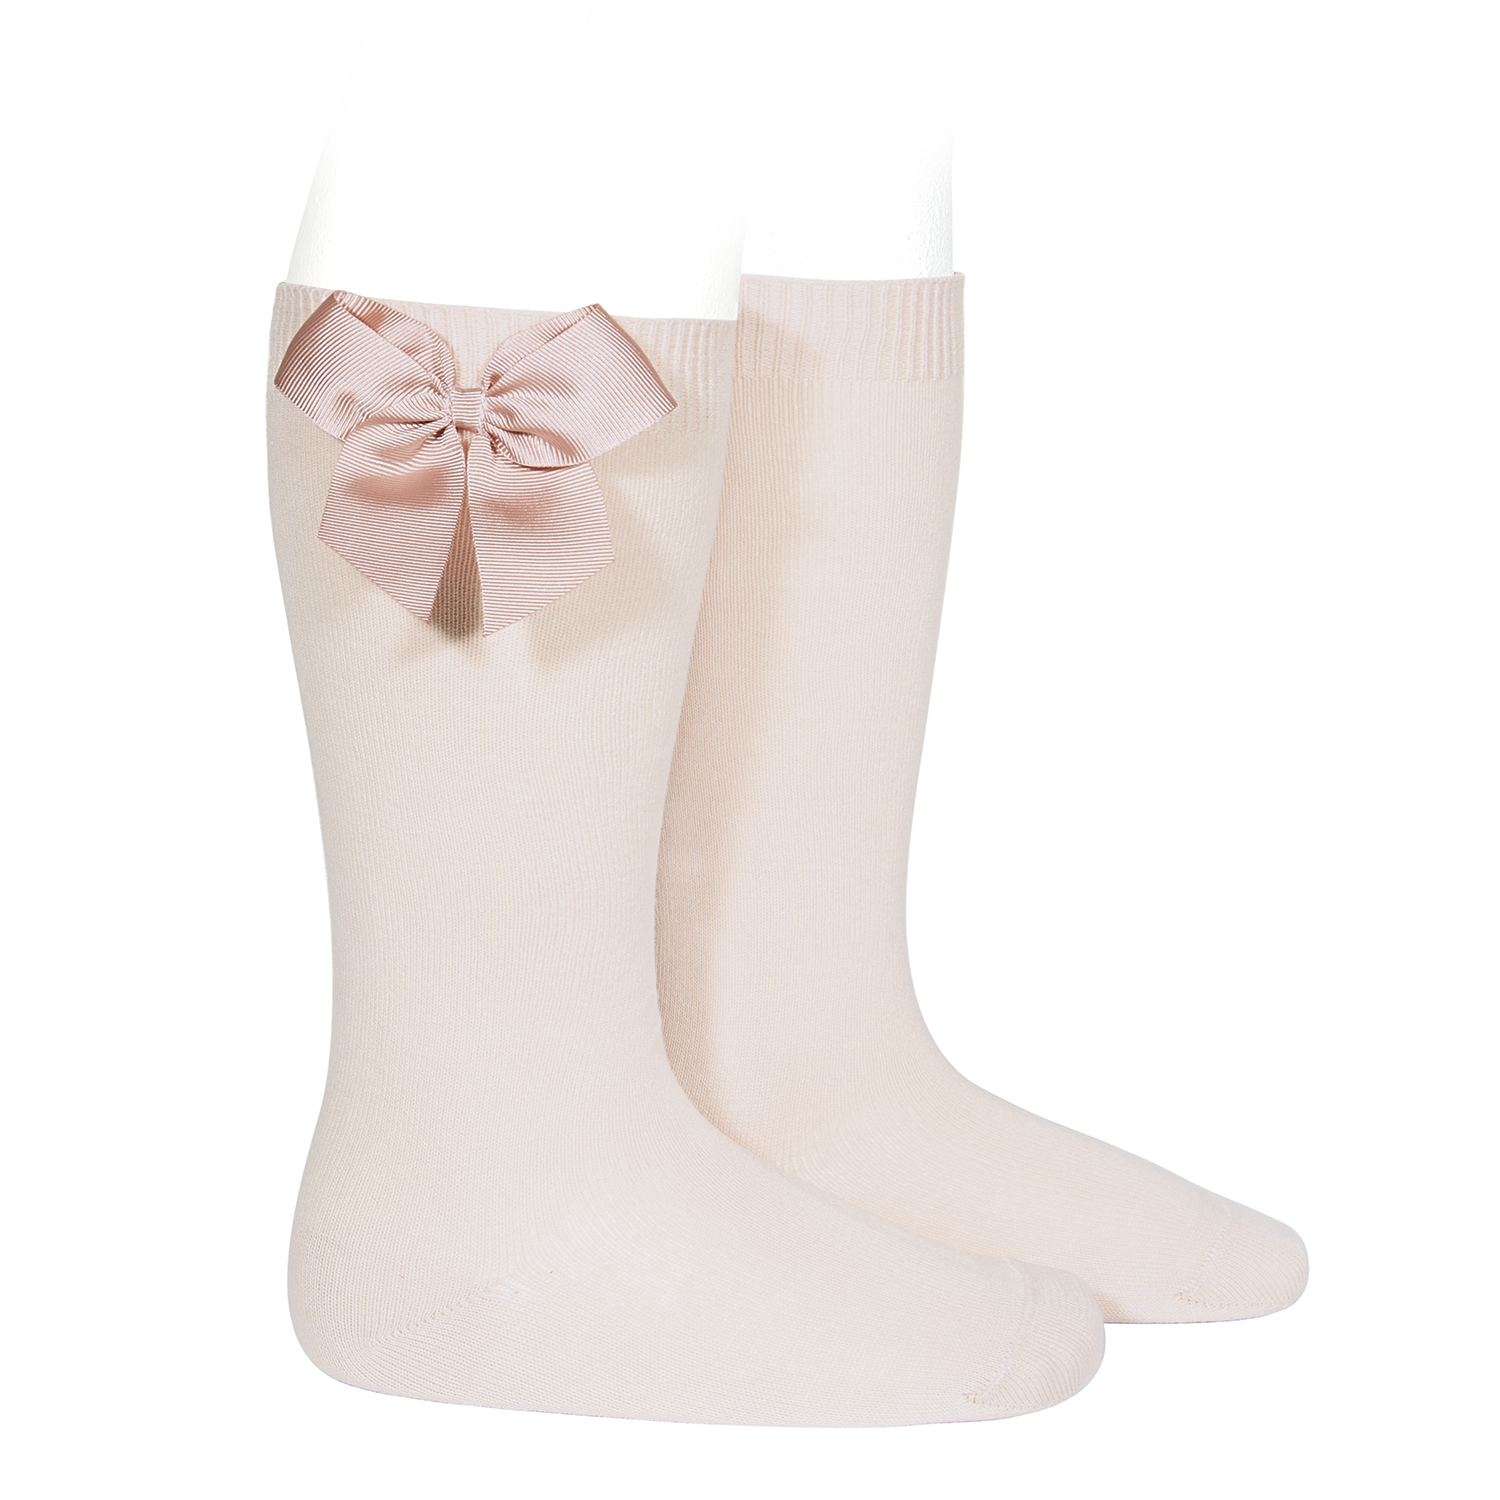 Niñas Calcetines altos con diseño de lazo, Mode de Mujer